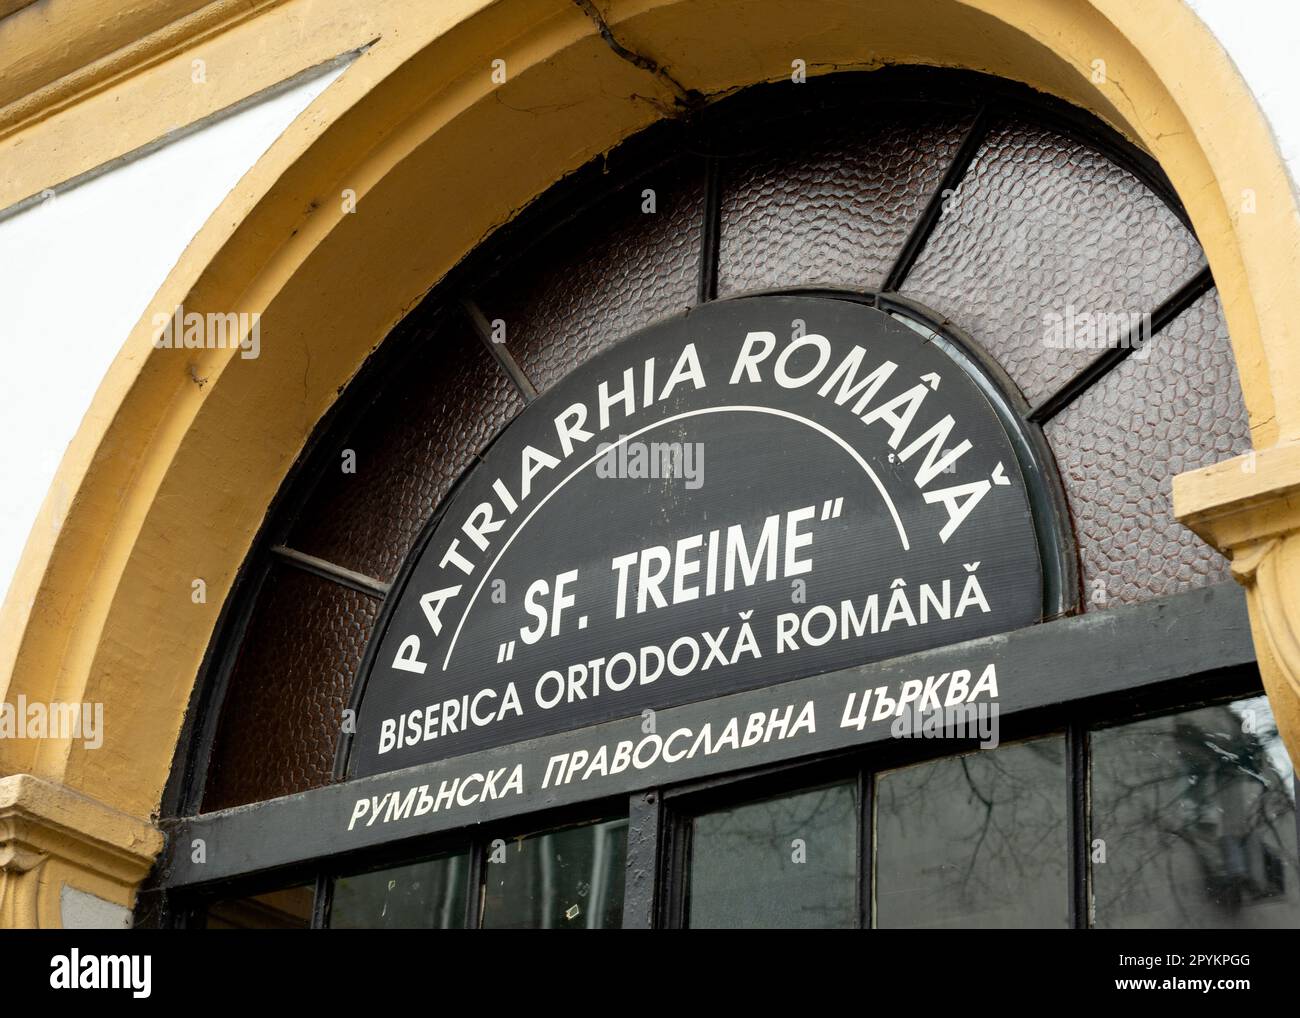 Chiesa ortodossa rumena SF. Treime a Sofia, Bulgaria Foto Stock